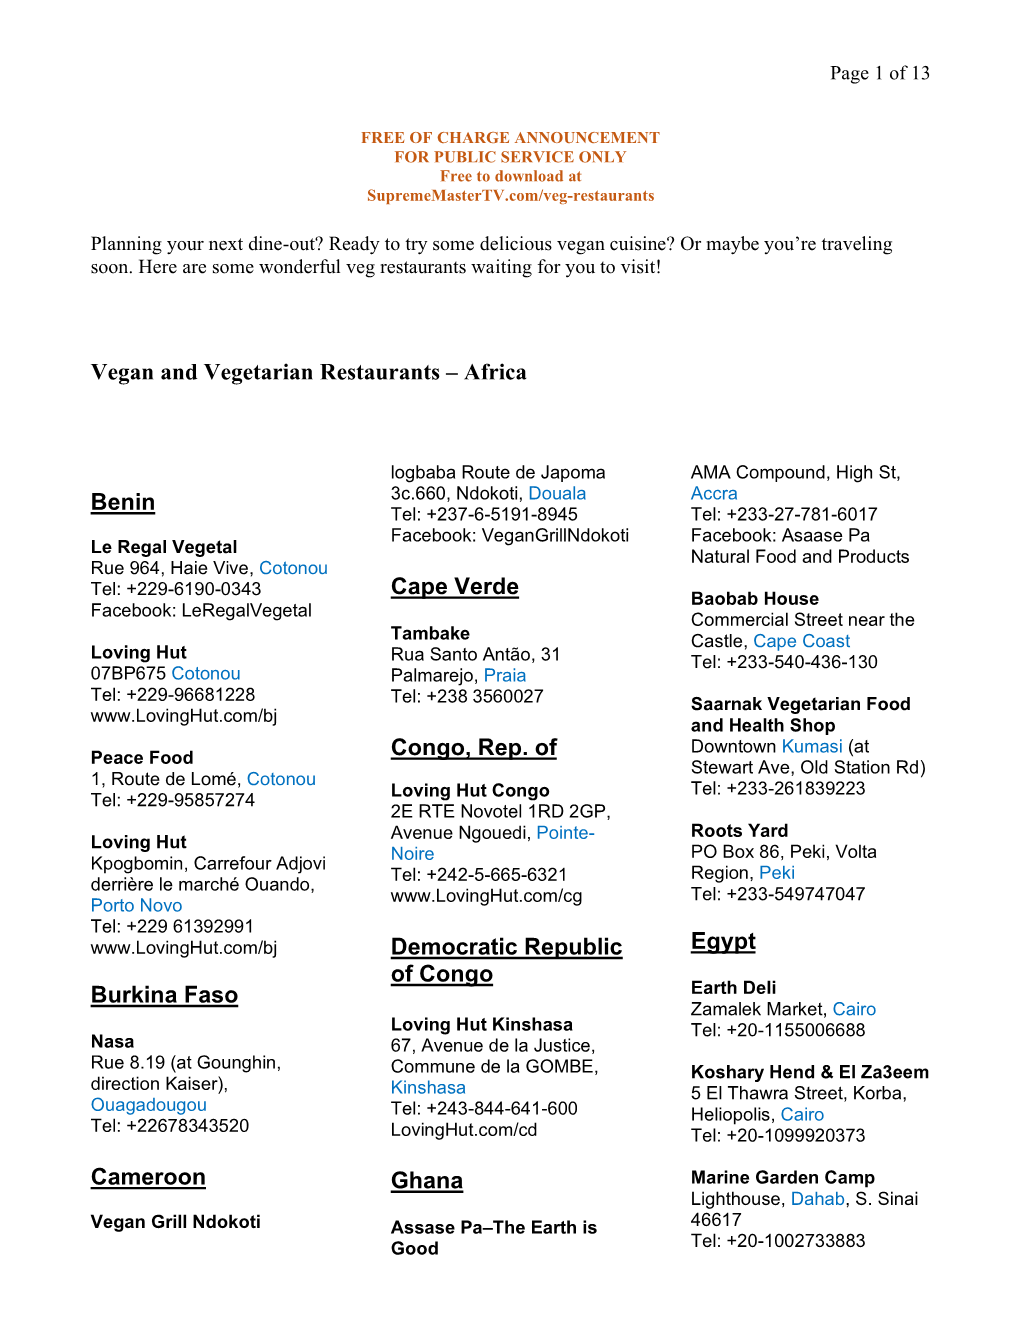 Vegan and Vegetarian Restaurants – Africa